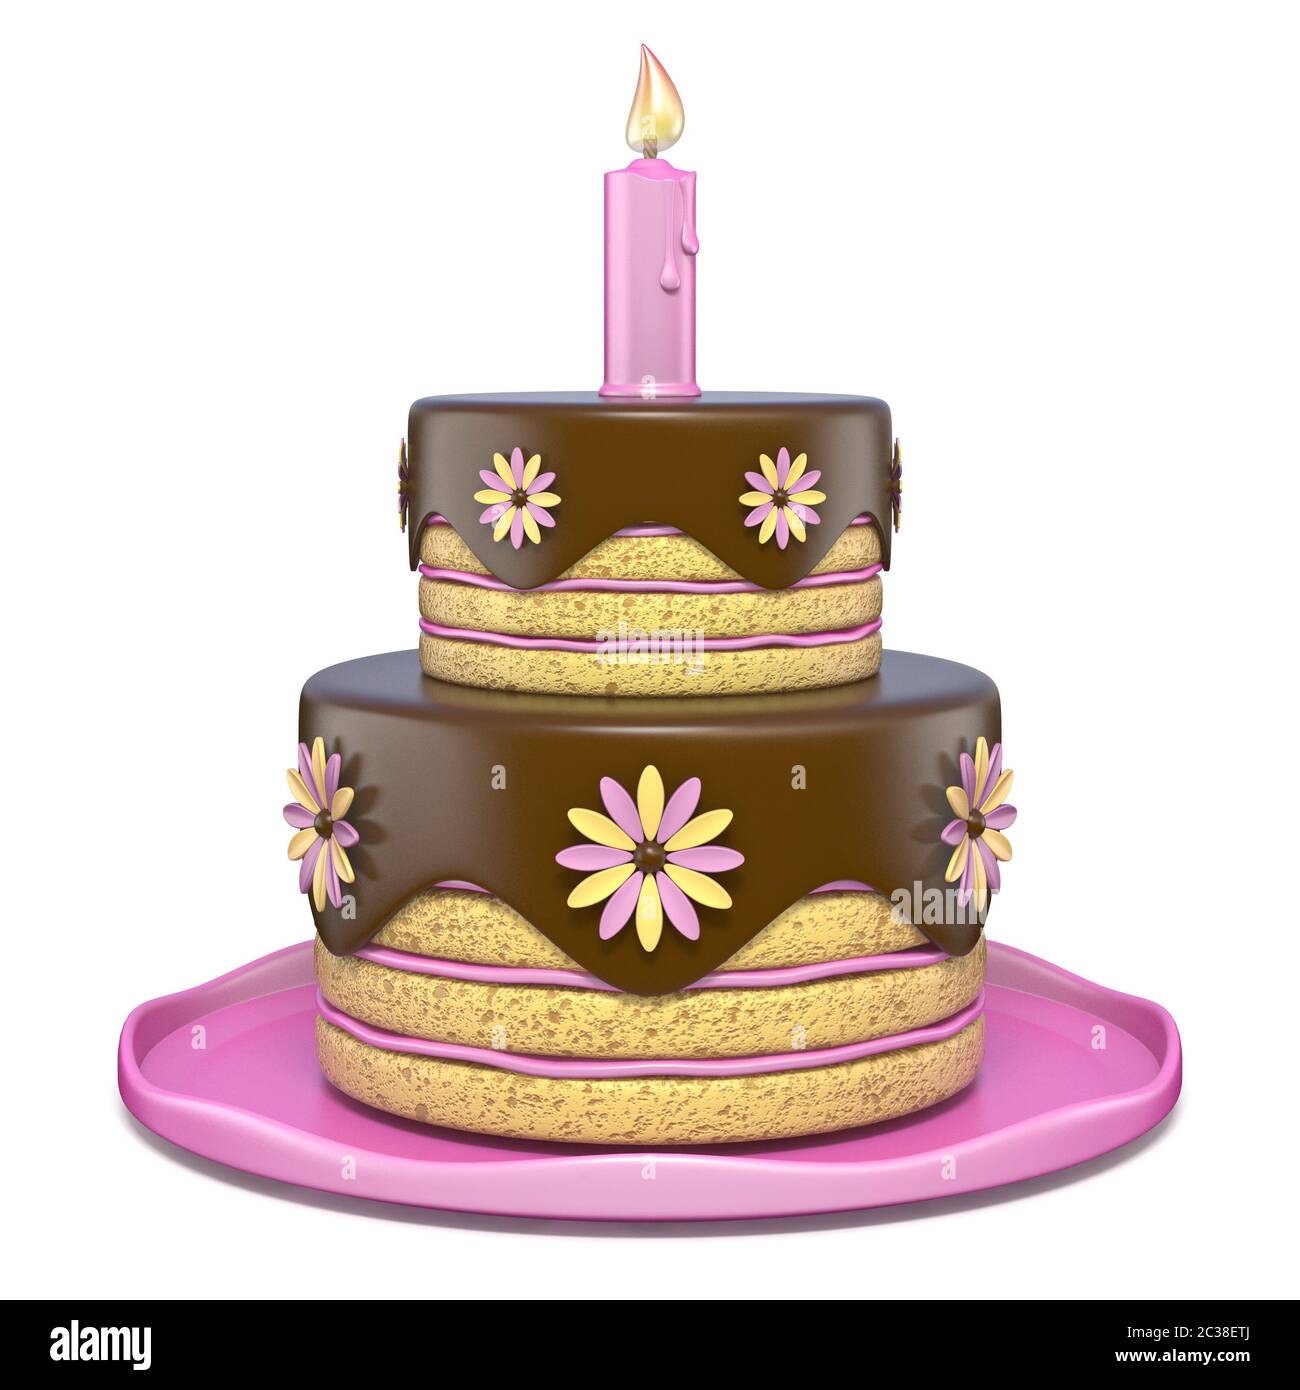 https://c8.alamy.com/comp/2C38ETJ/two-tier-round-chocolate-flowers-cake-3d-render-illustration-isolated-on-white-background-2C38ETJ.jpg